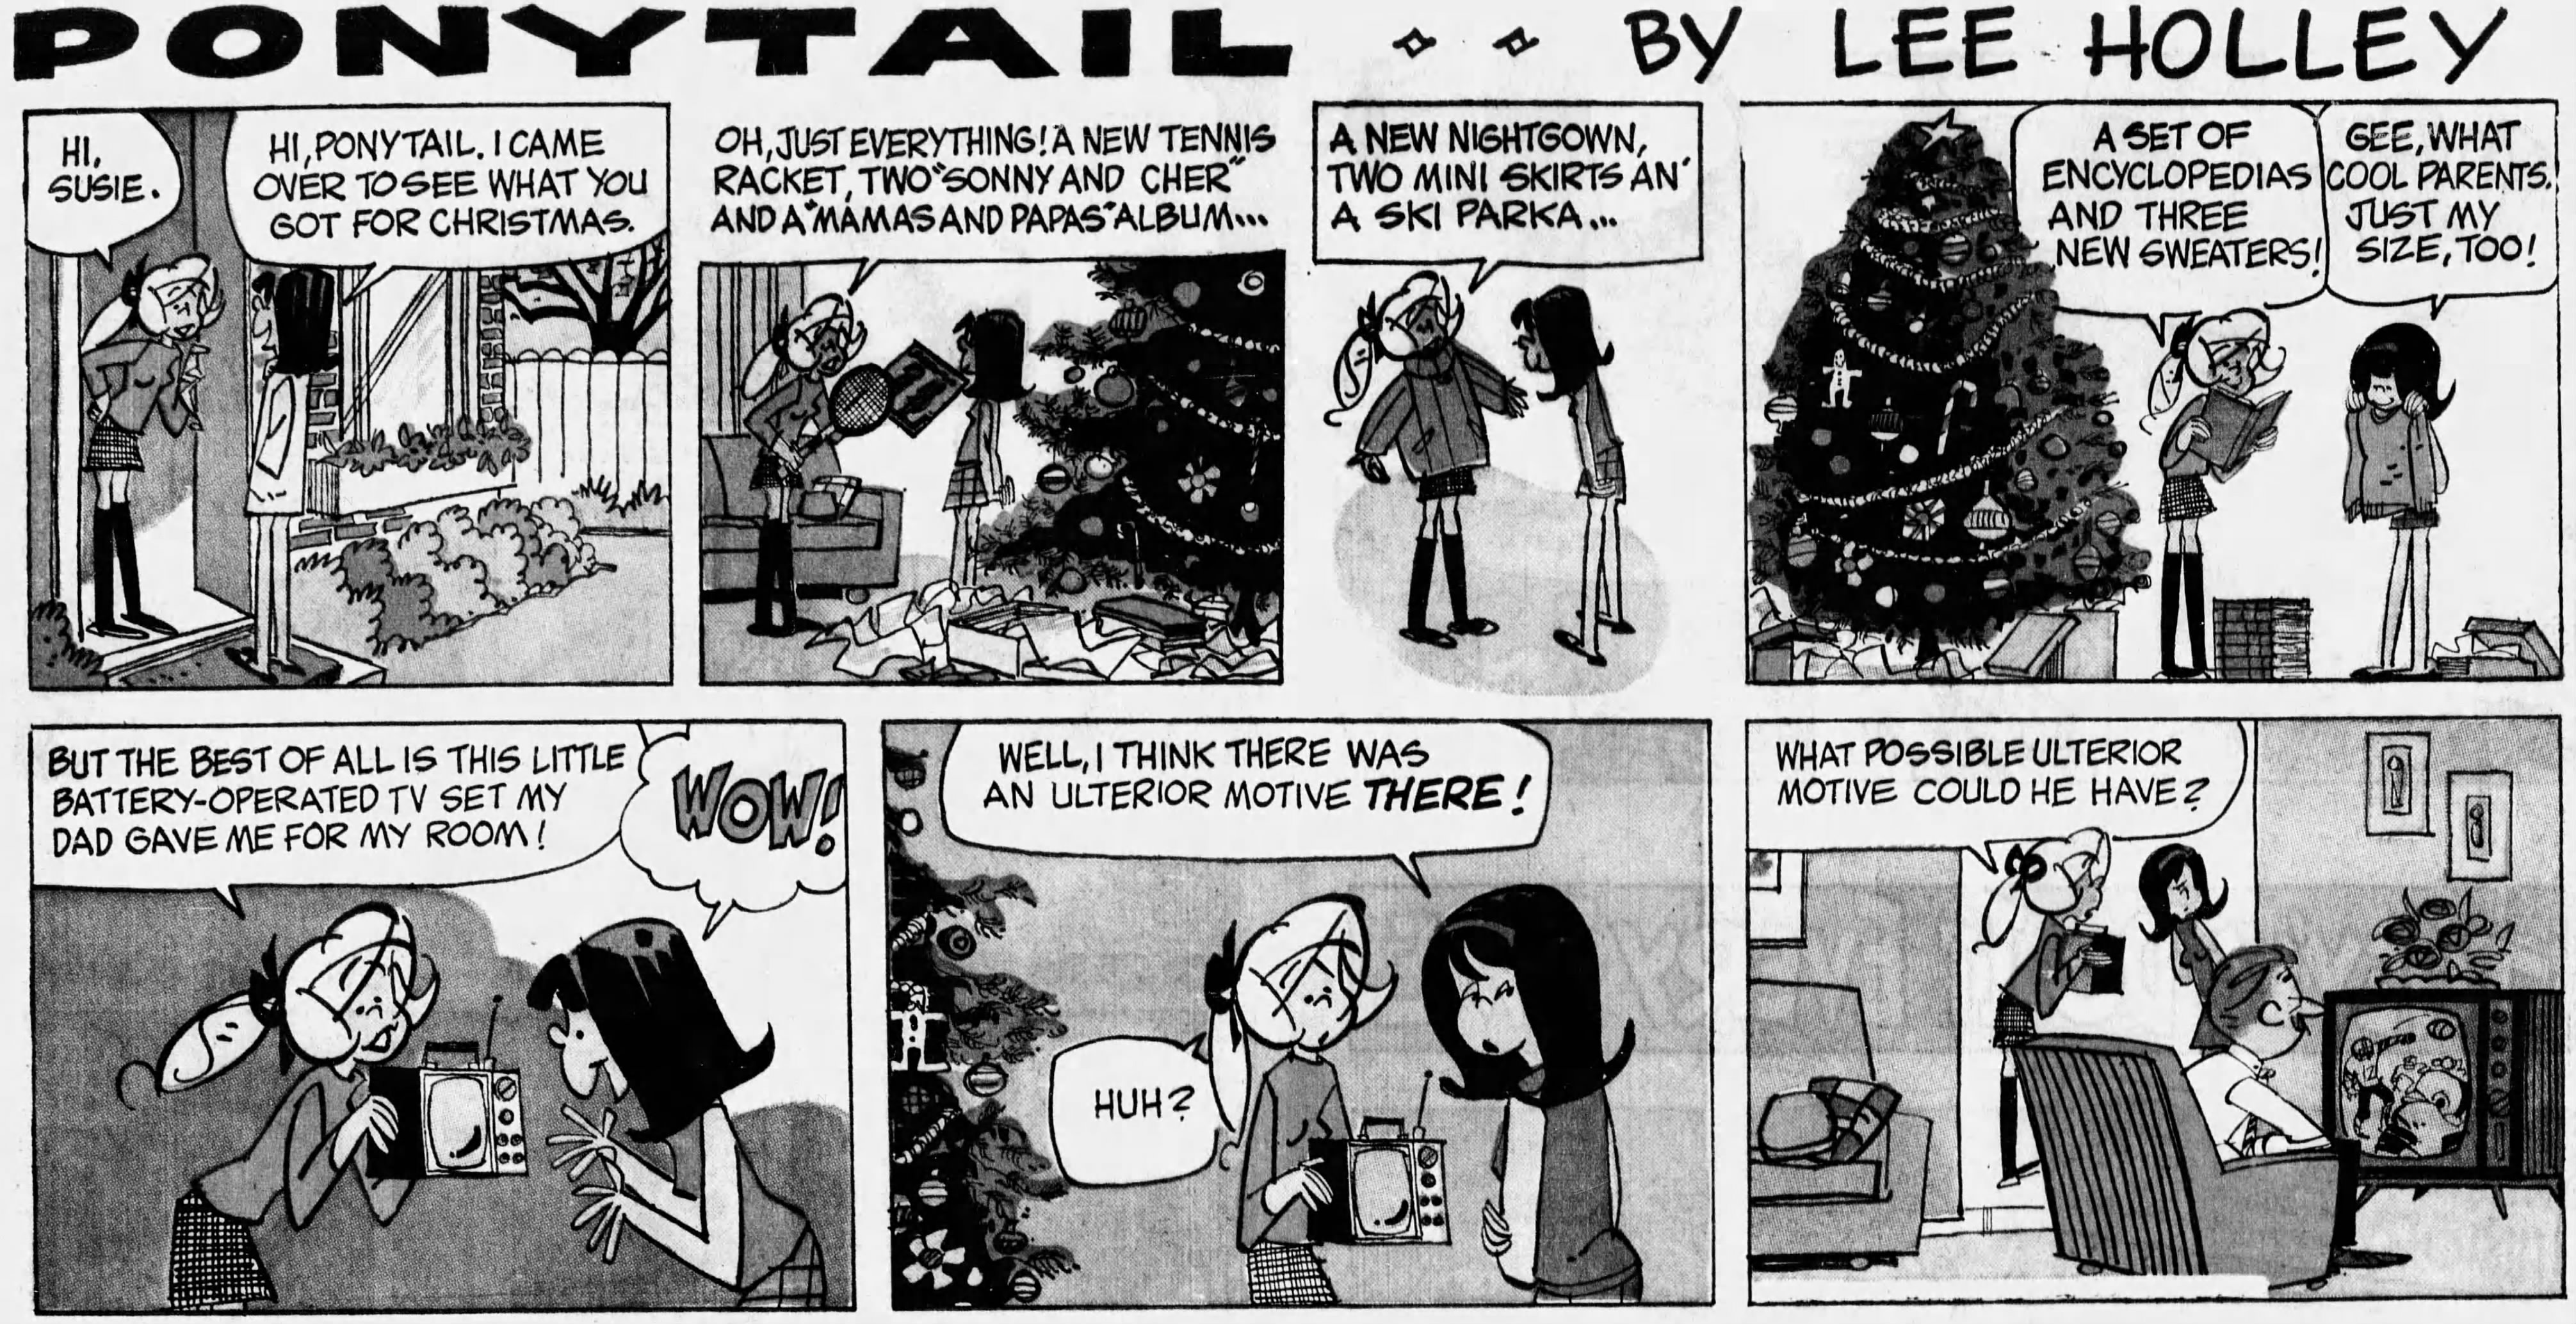 Ponytail, December 25, 1966